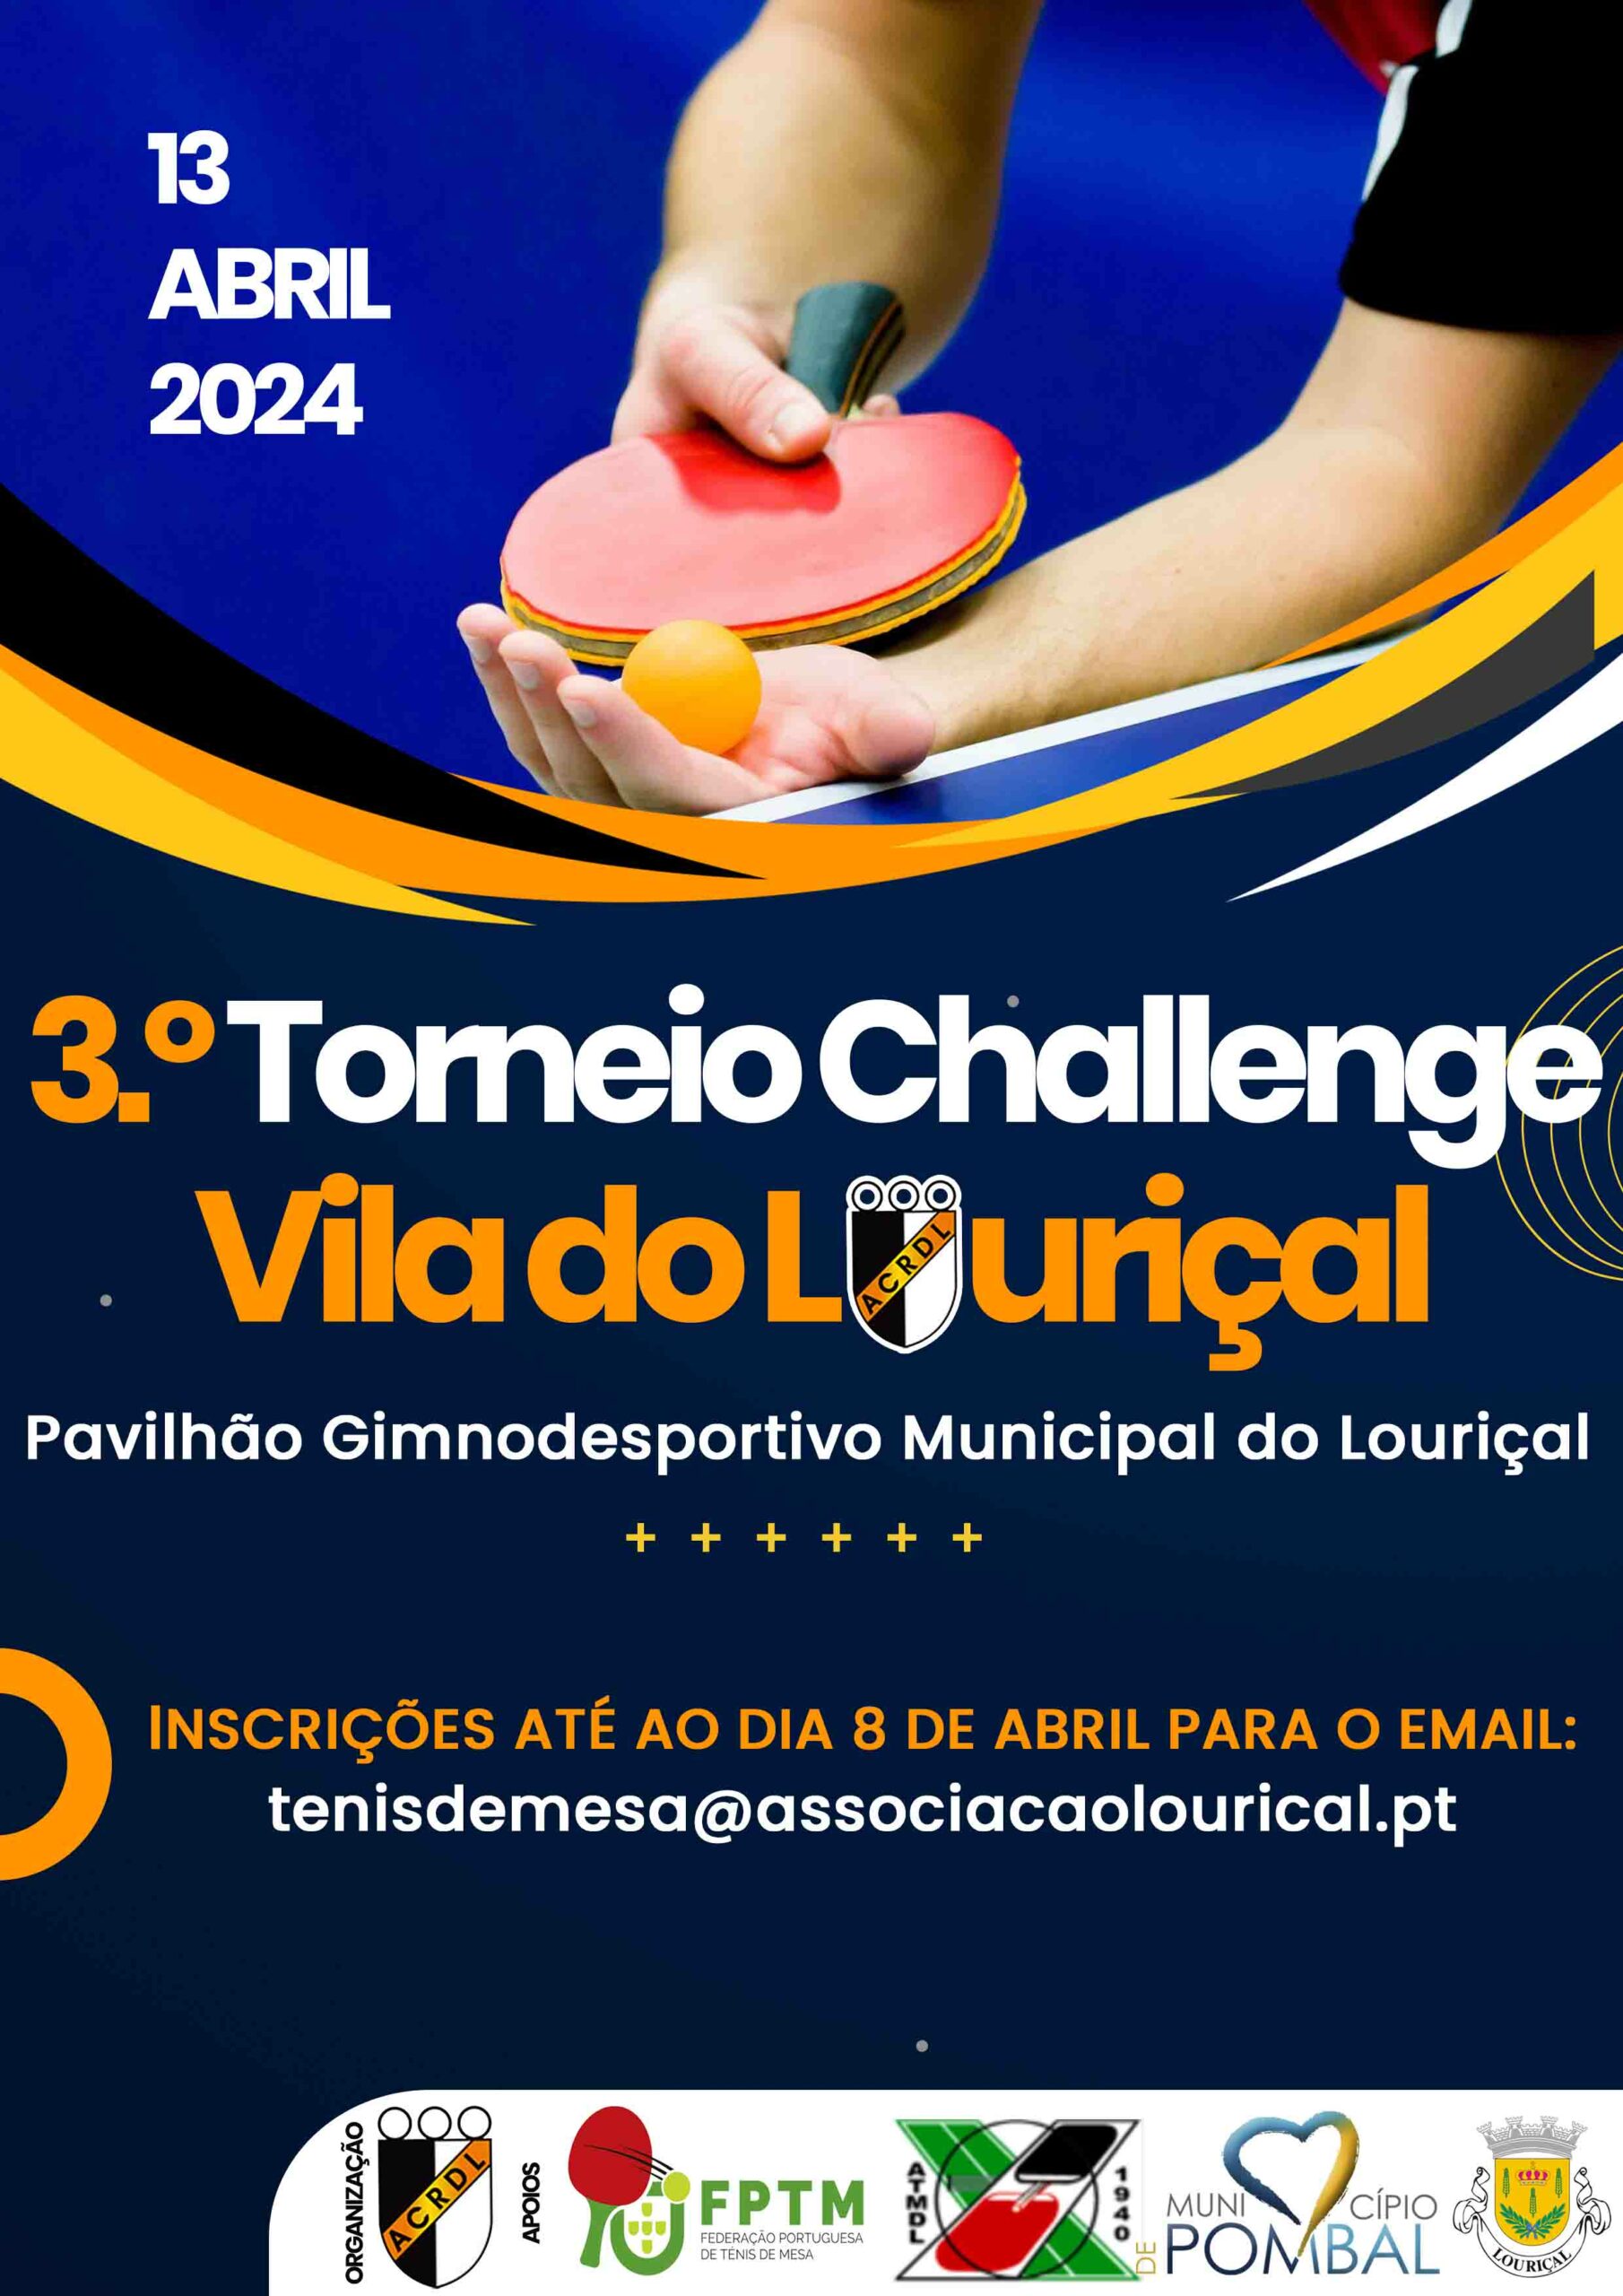 III Torneio Challenge “Vila do Louriçal” a 13 de abril